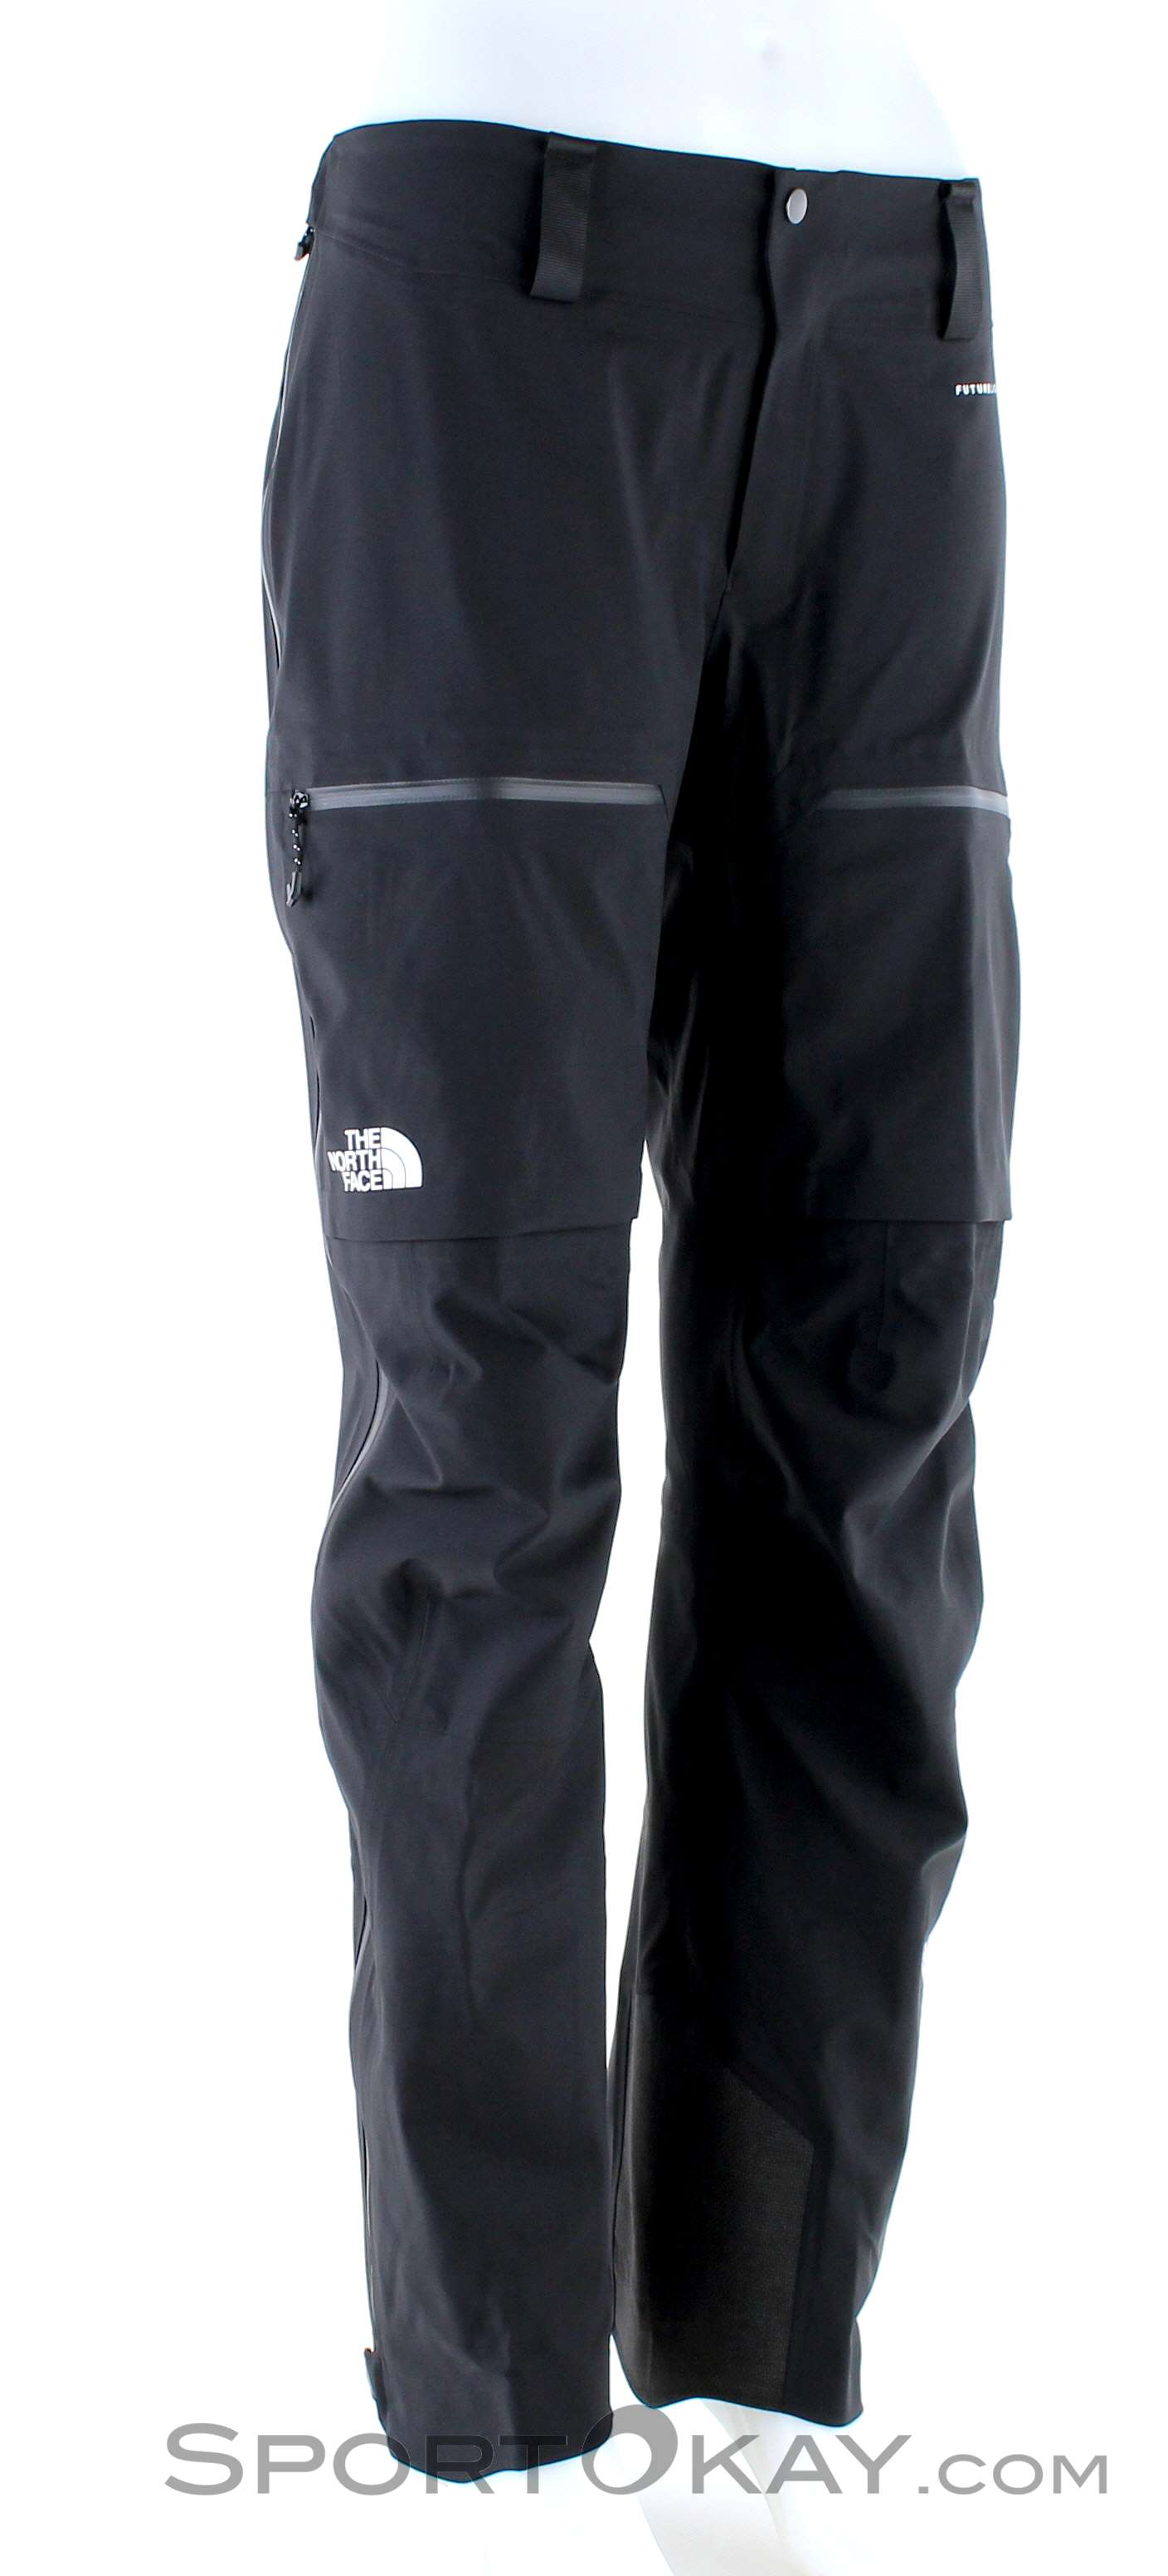 north face summit series ski pants